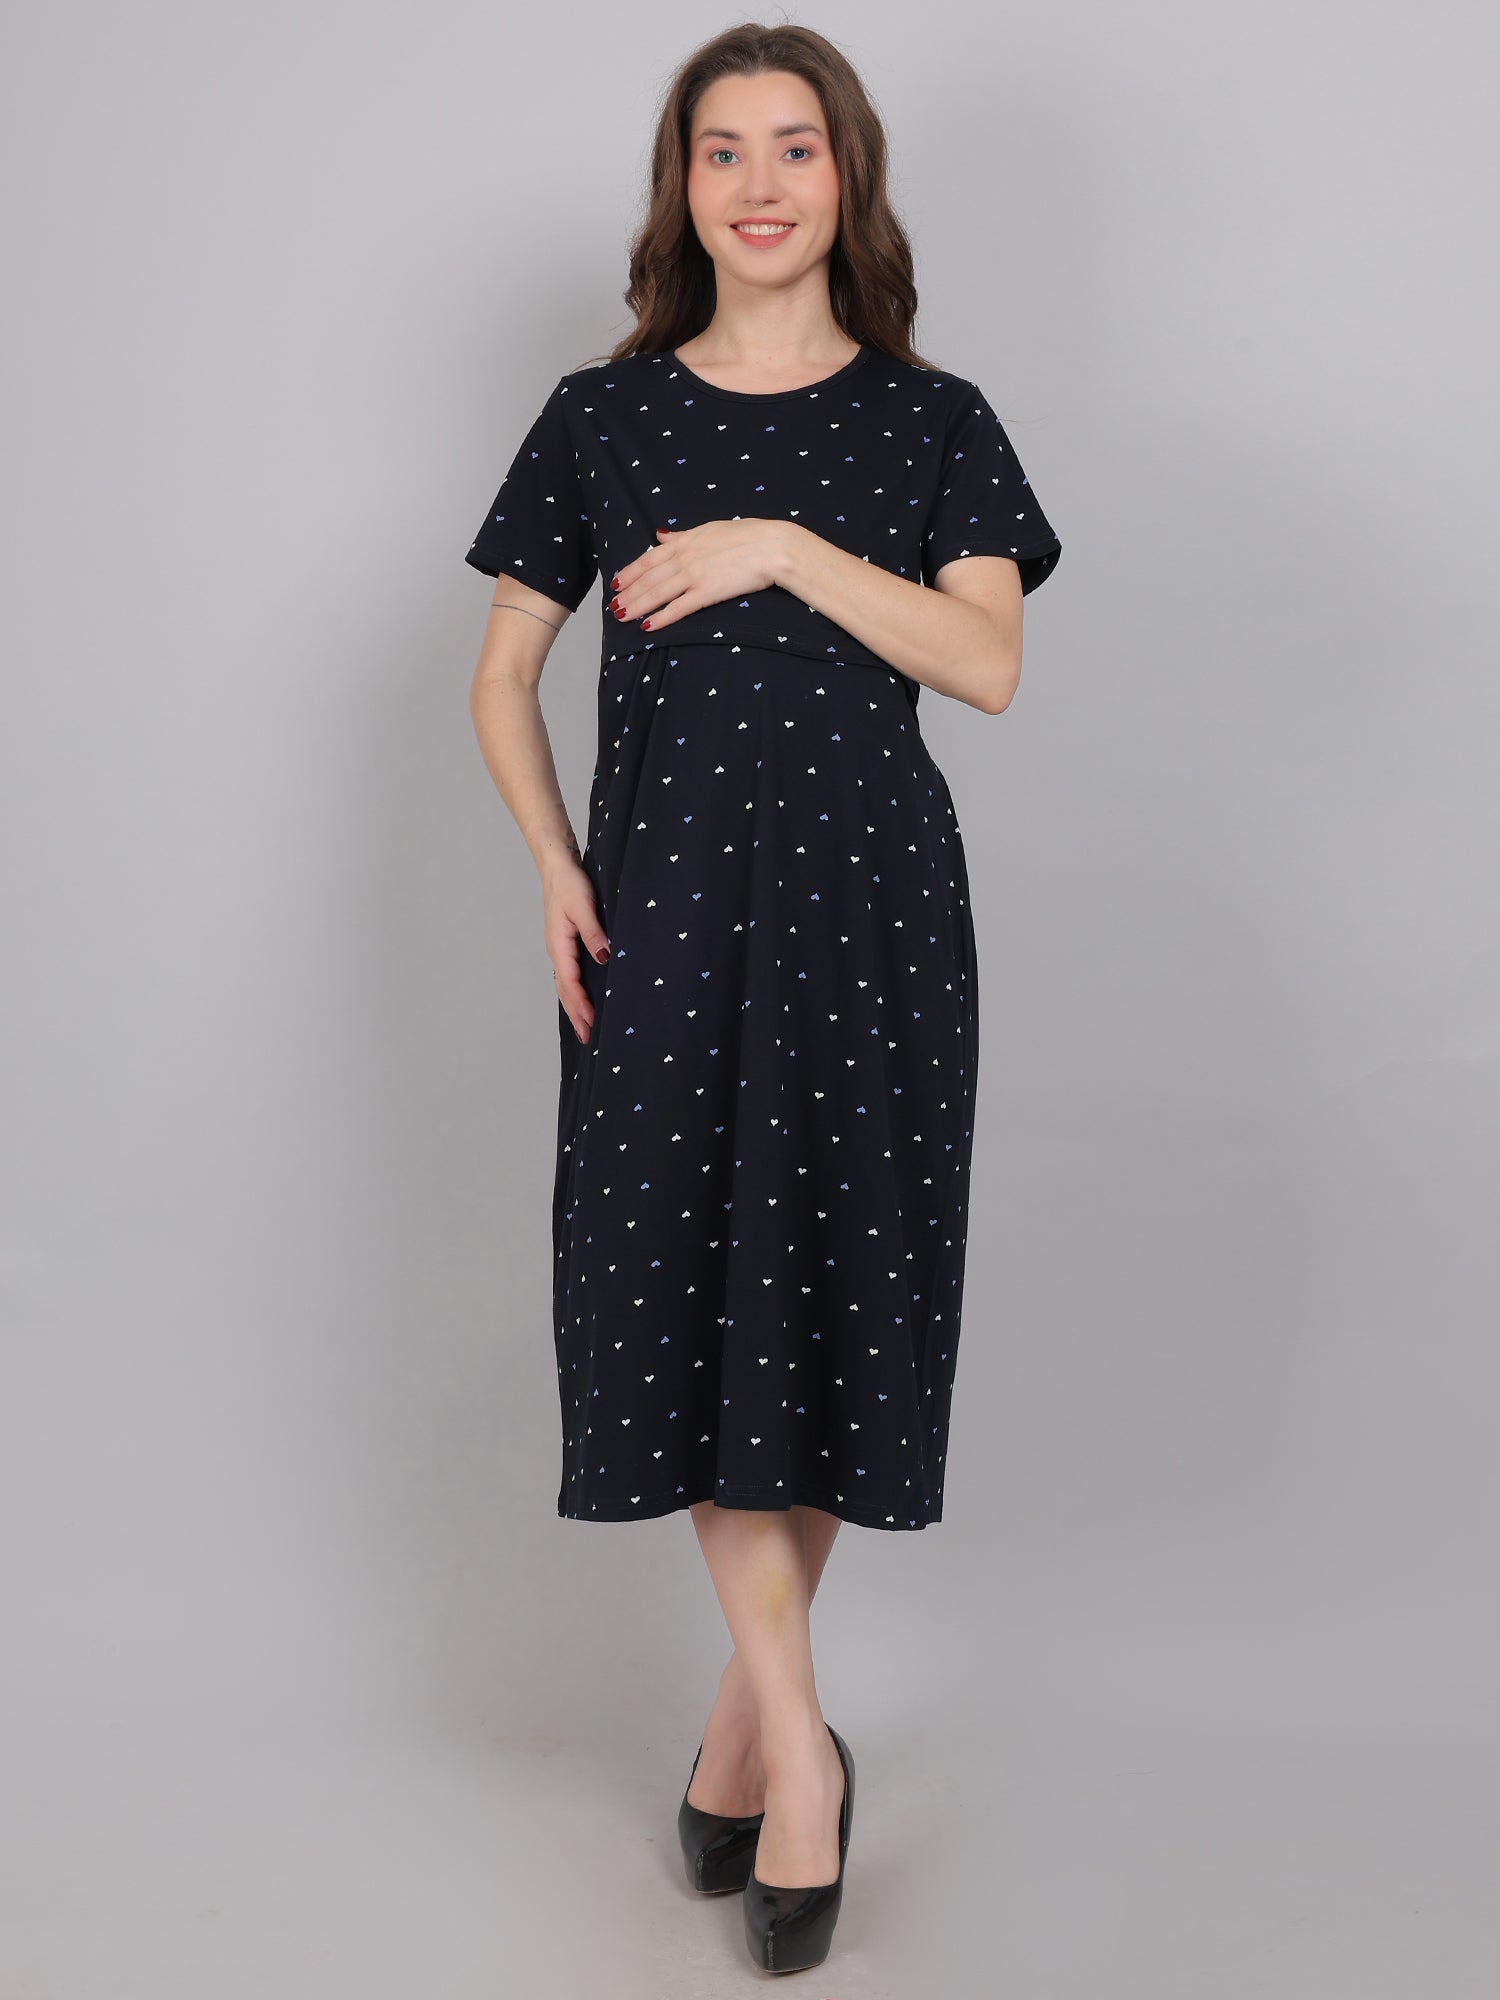 Black Heart Knitted Cotton Maternity Loungewear Dress